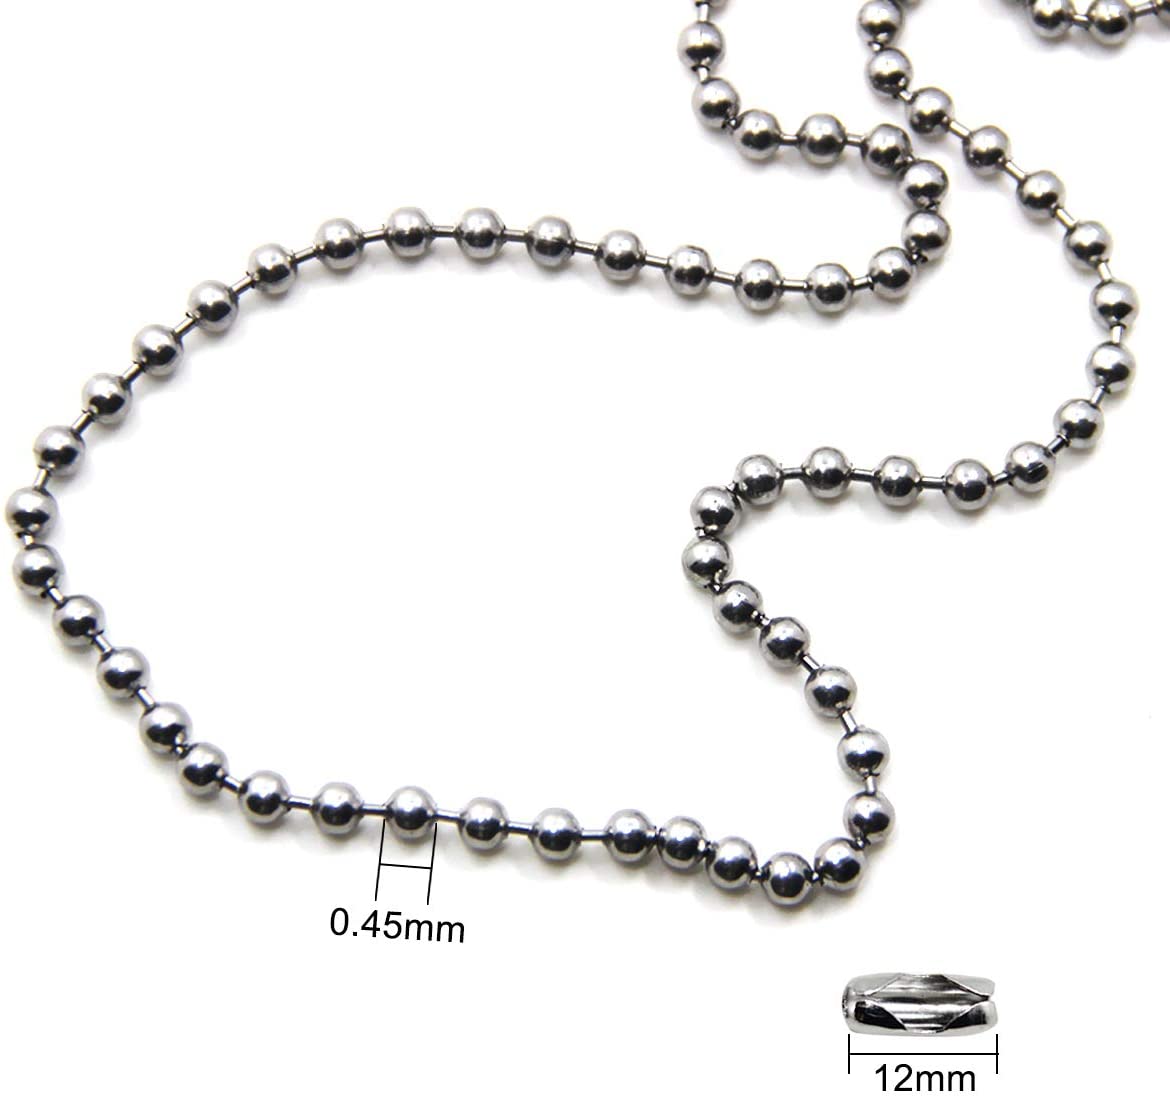 6m Ball Bead Chain Betterjonny 45mm Stainless Steel Ball Chain Necklace Bead Beaded Pull Chain